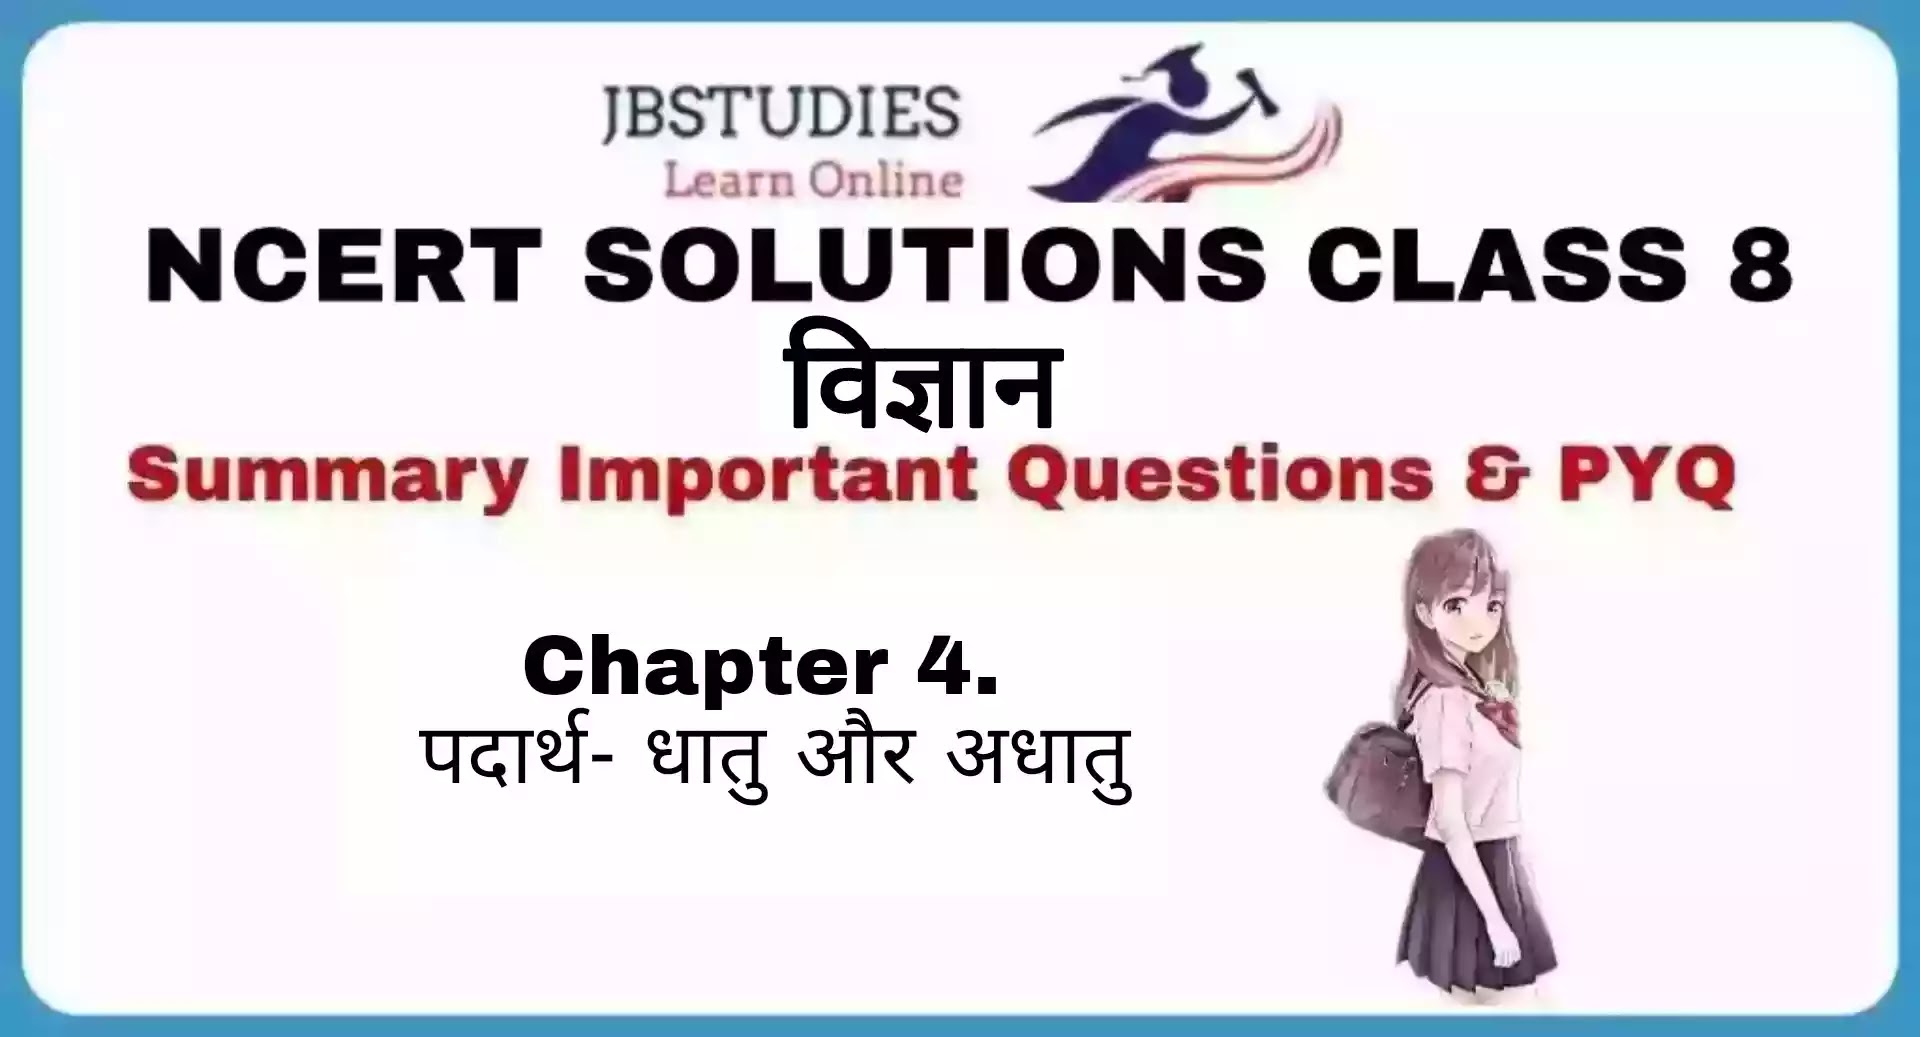 Solutions Class 8 विज्ञान Chapter- 4 (पदार्थ: धातु और अधातु)